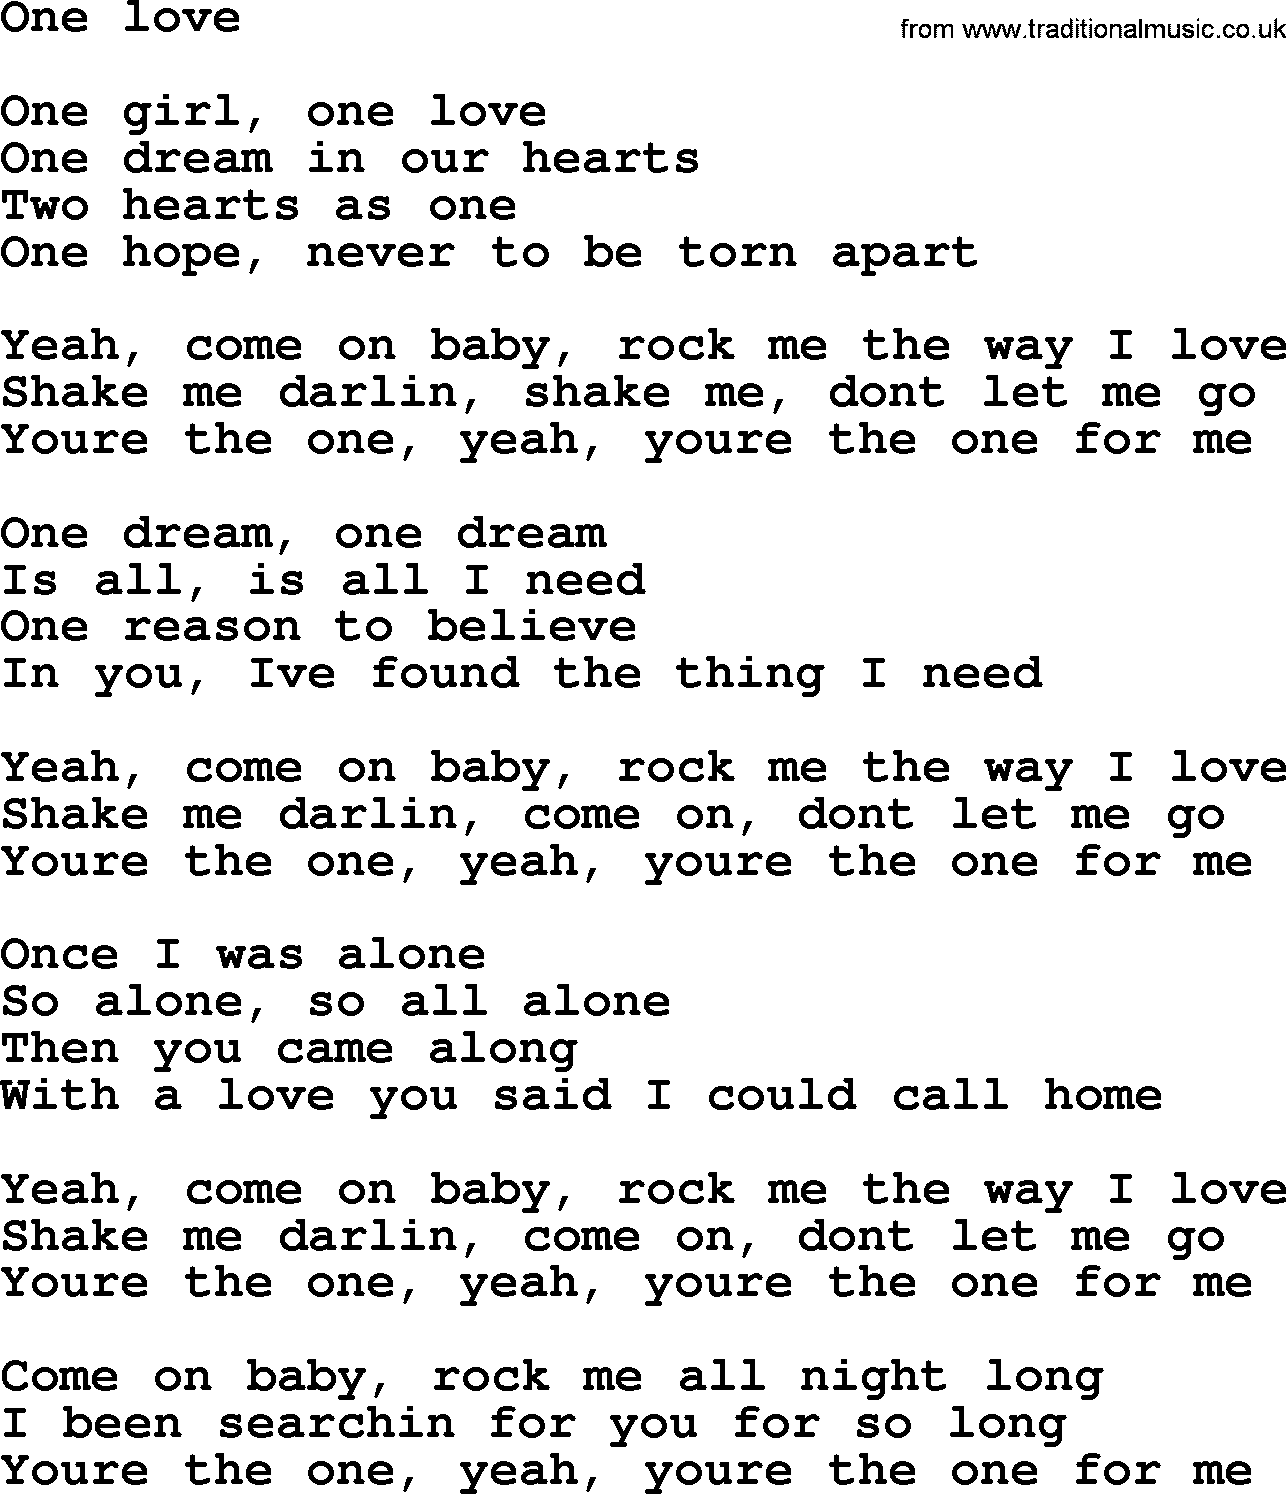 Bruce Springsteen song: One Love lyrics